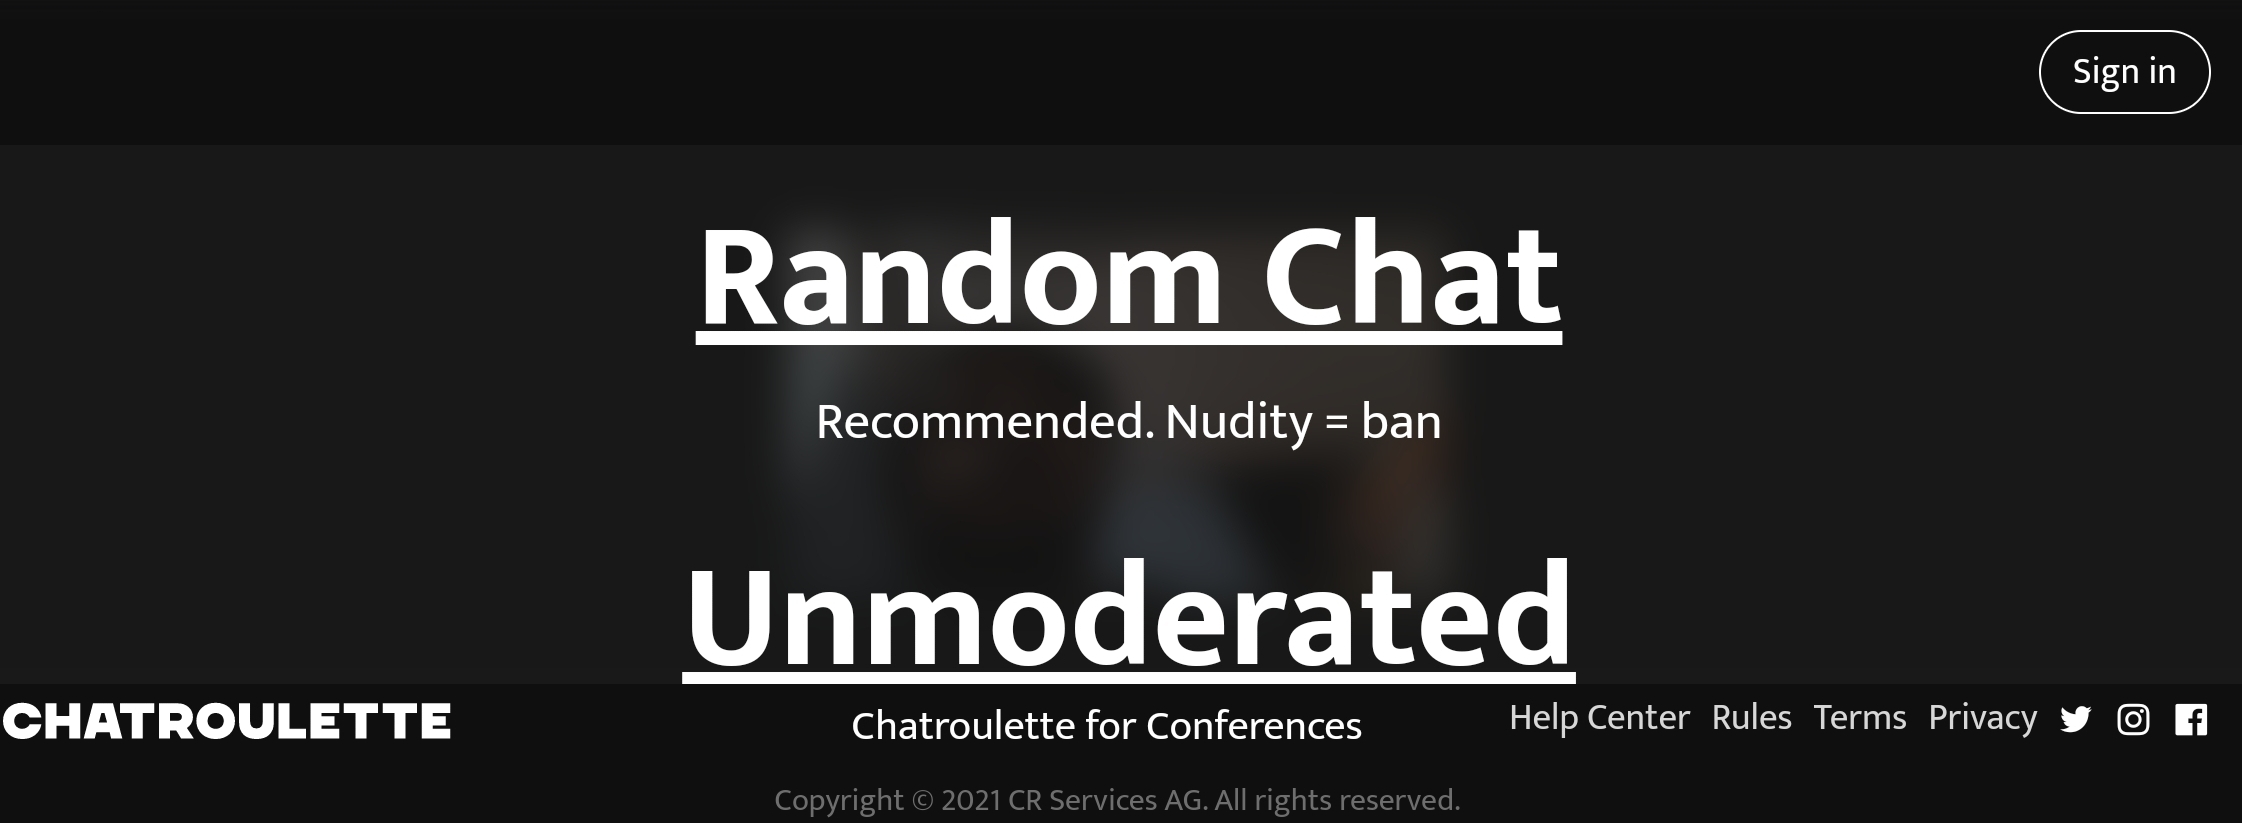 Random chat rulet ChatRoulette